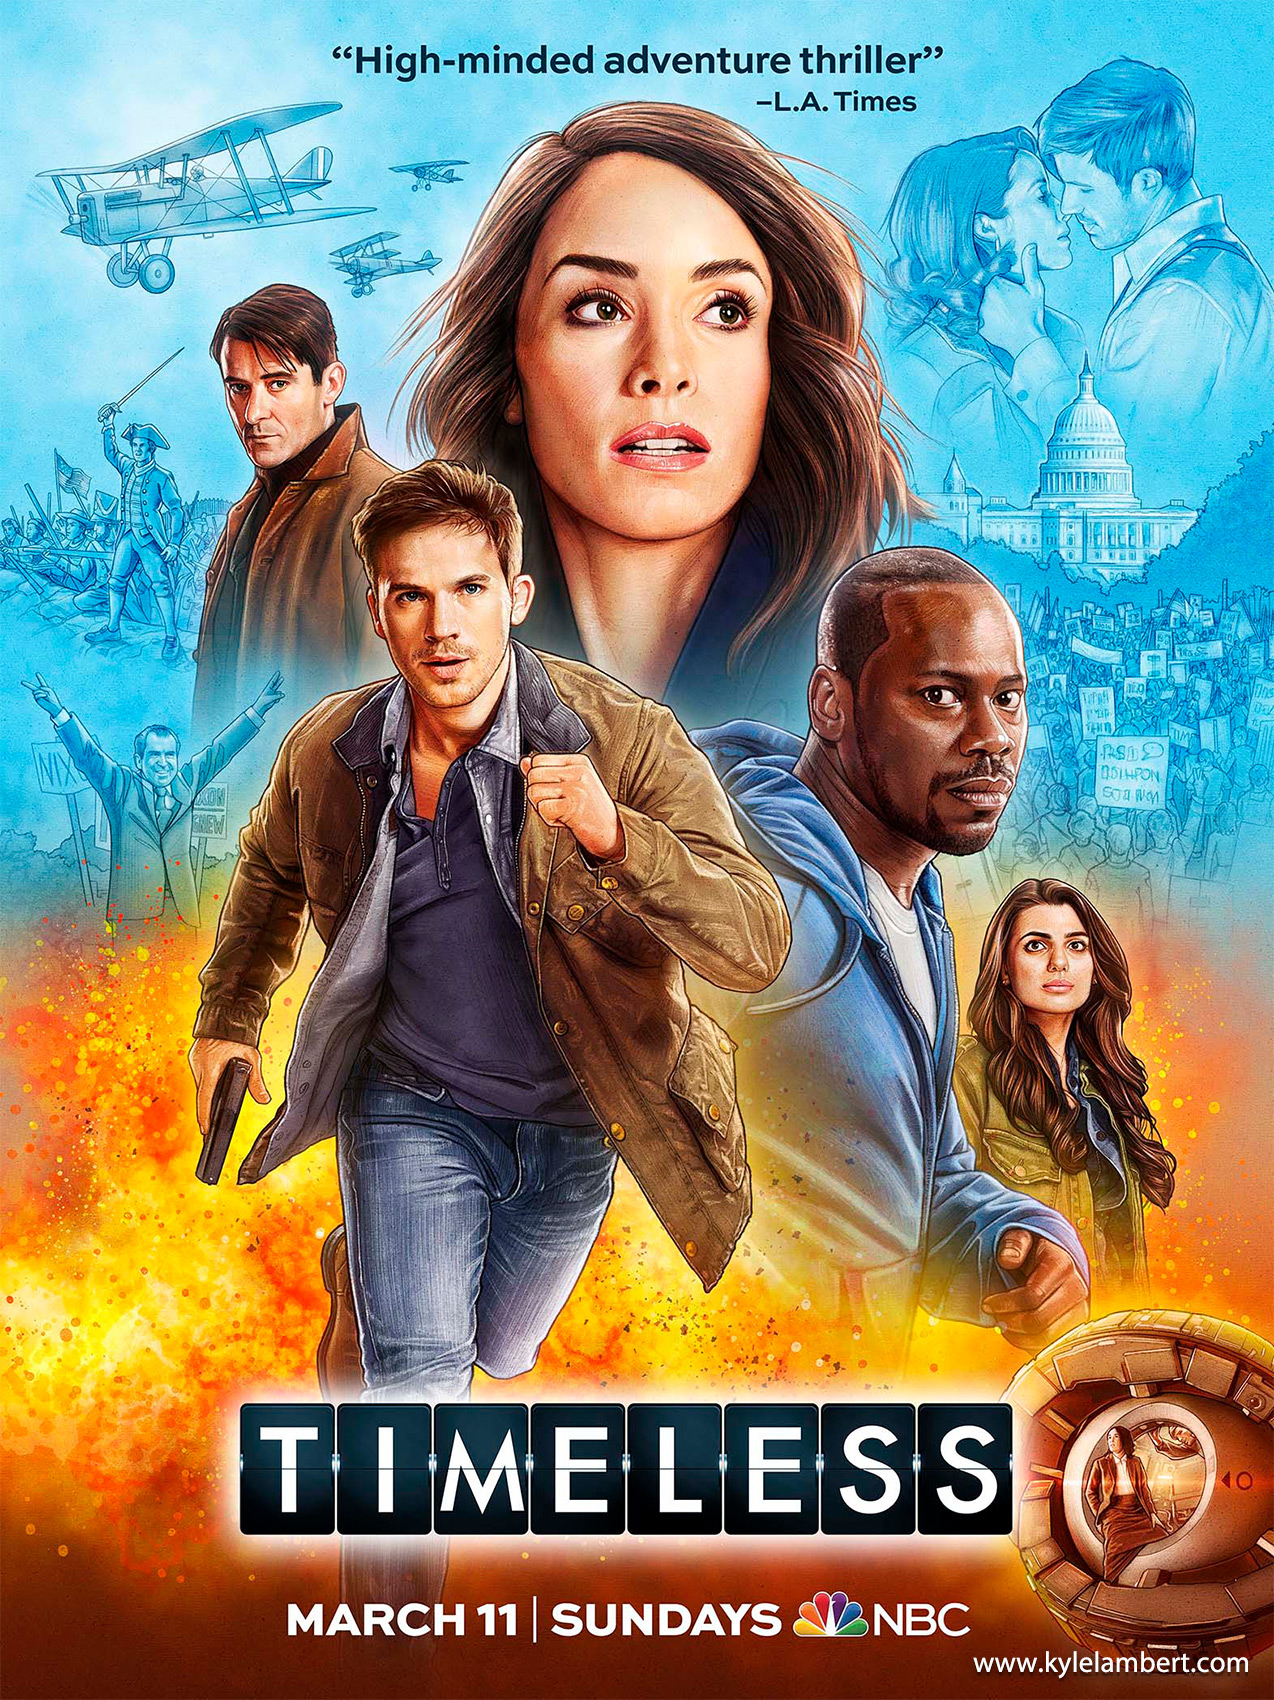 Timeless - Season 2